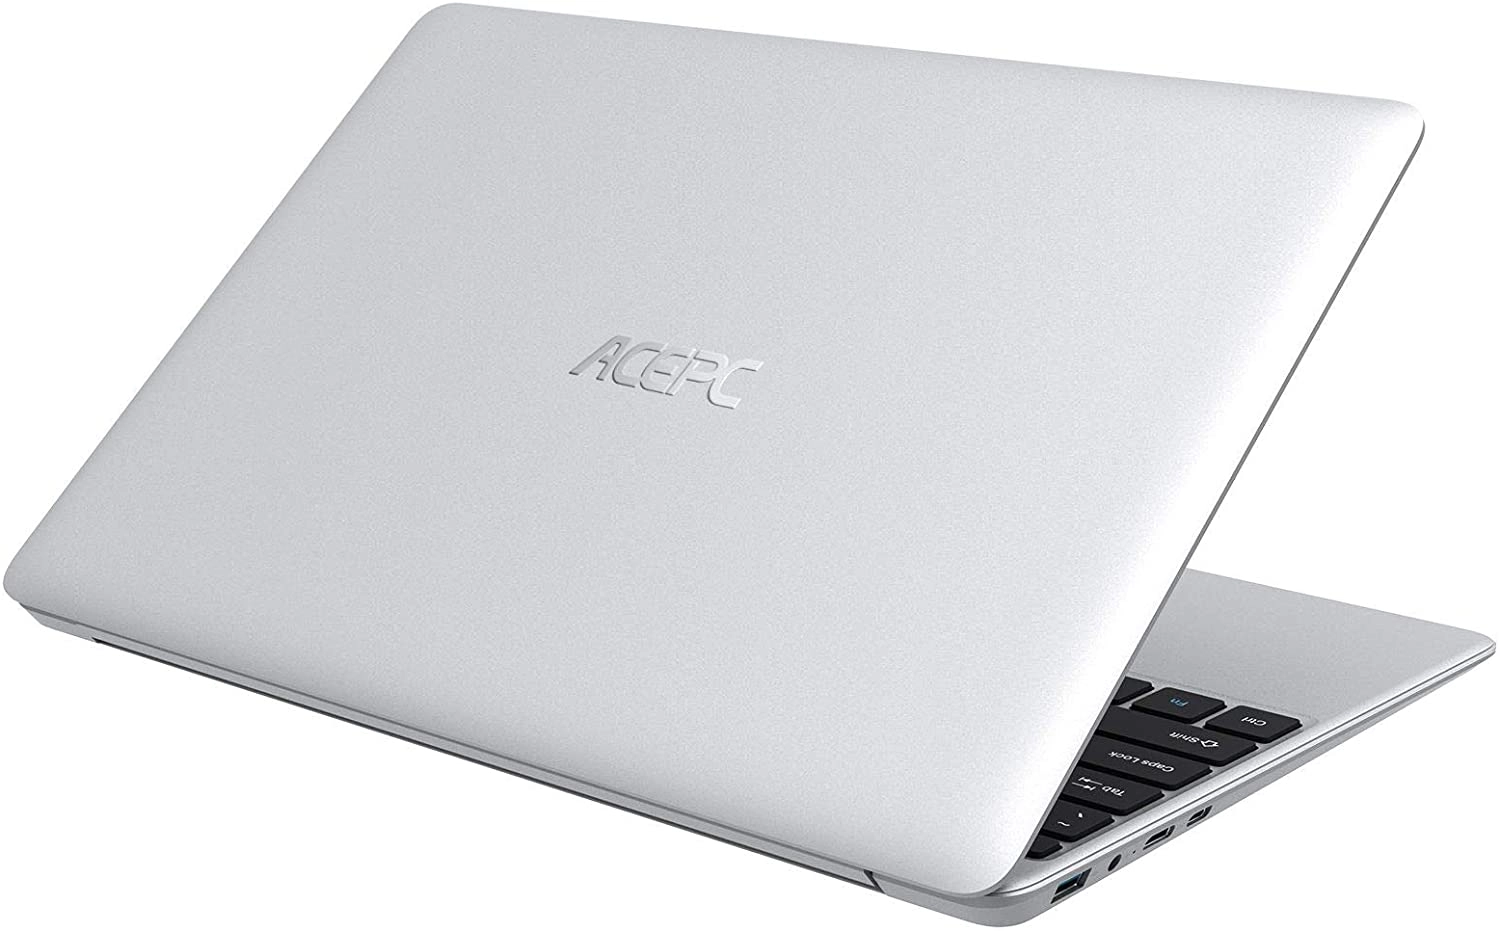 ACEPC KinsBook laptop image